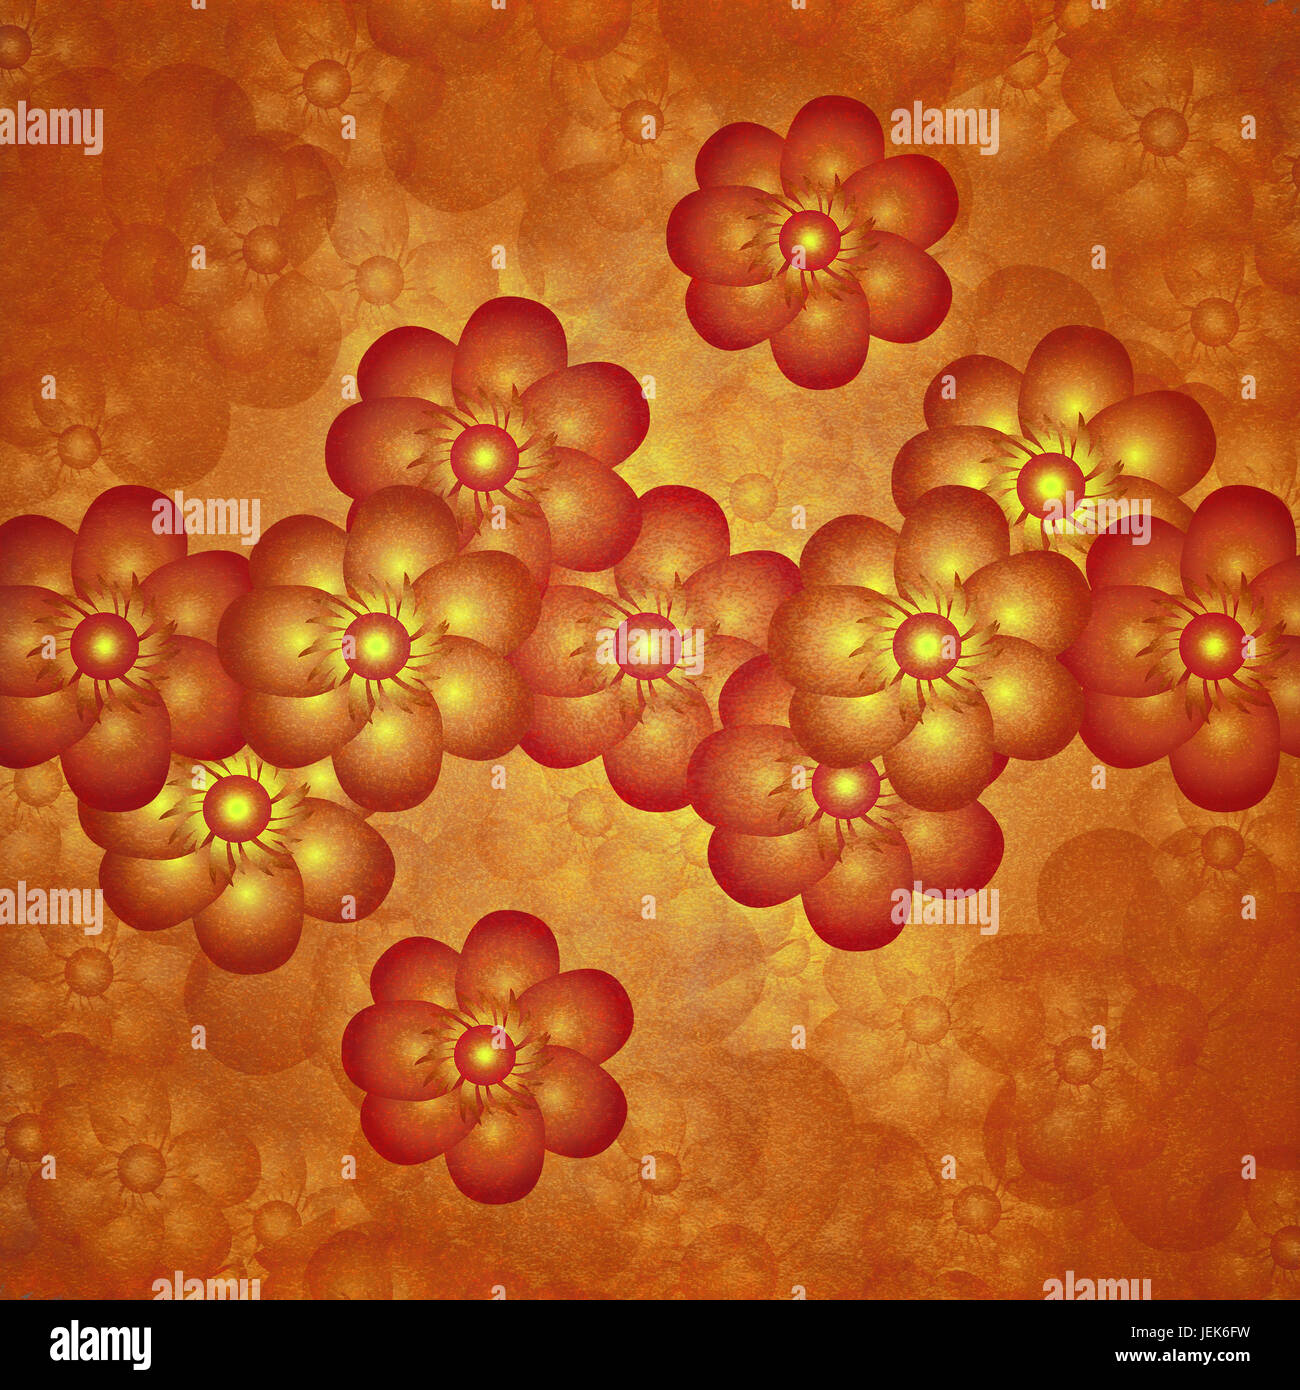 Farbenfrohe moderne Blumenmotiv Design Stockfoto